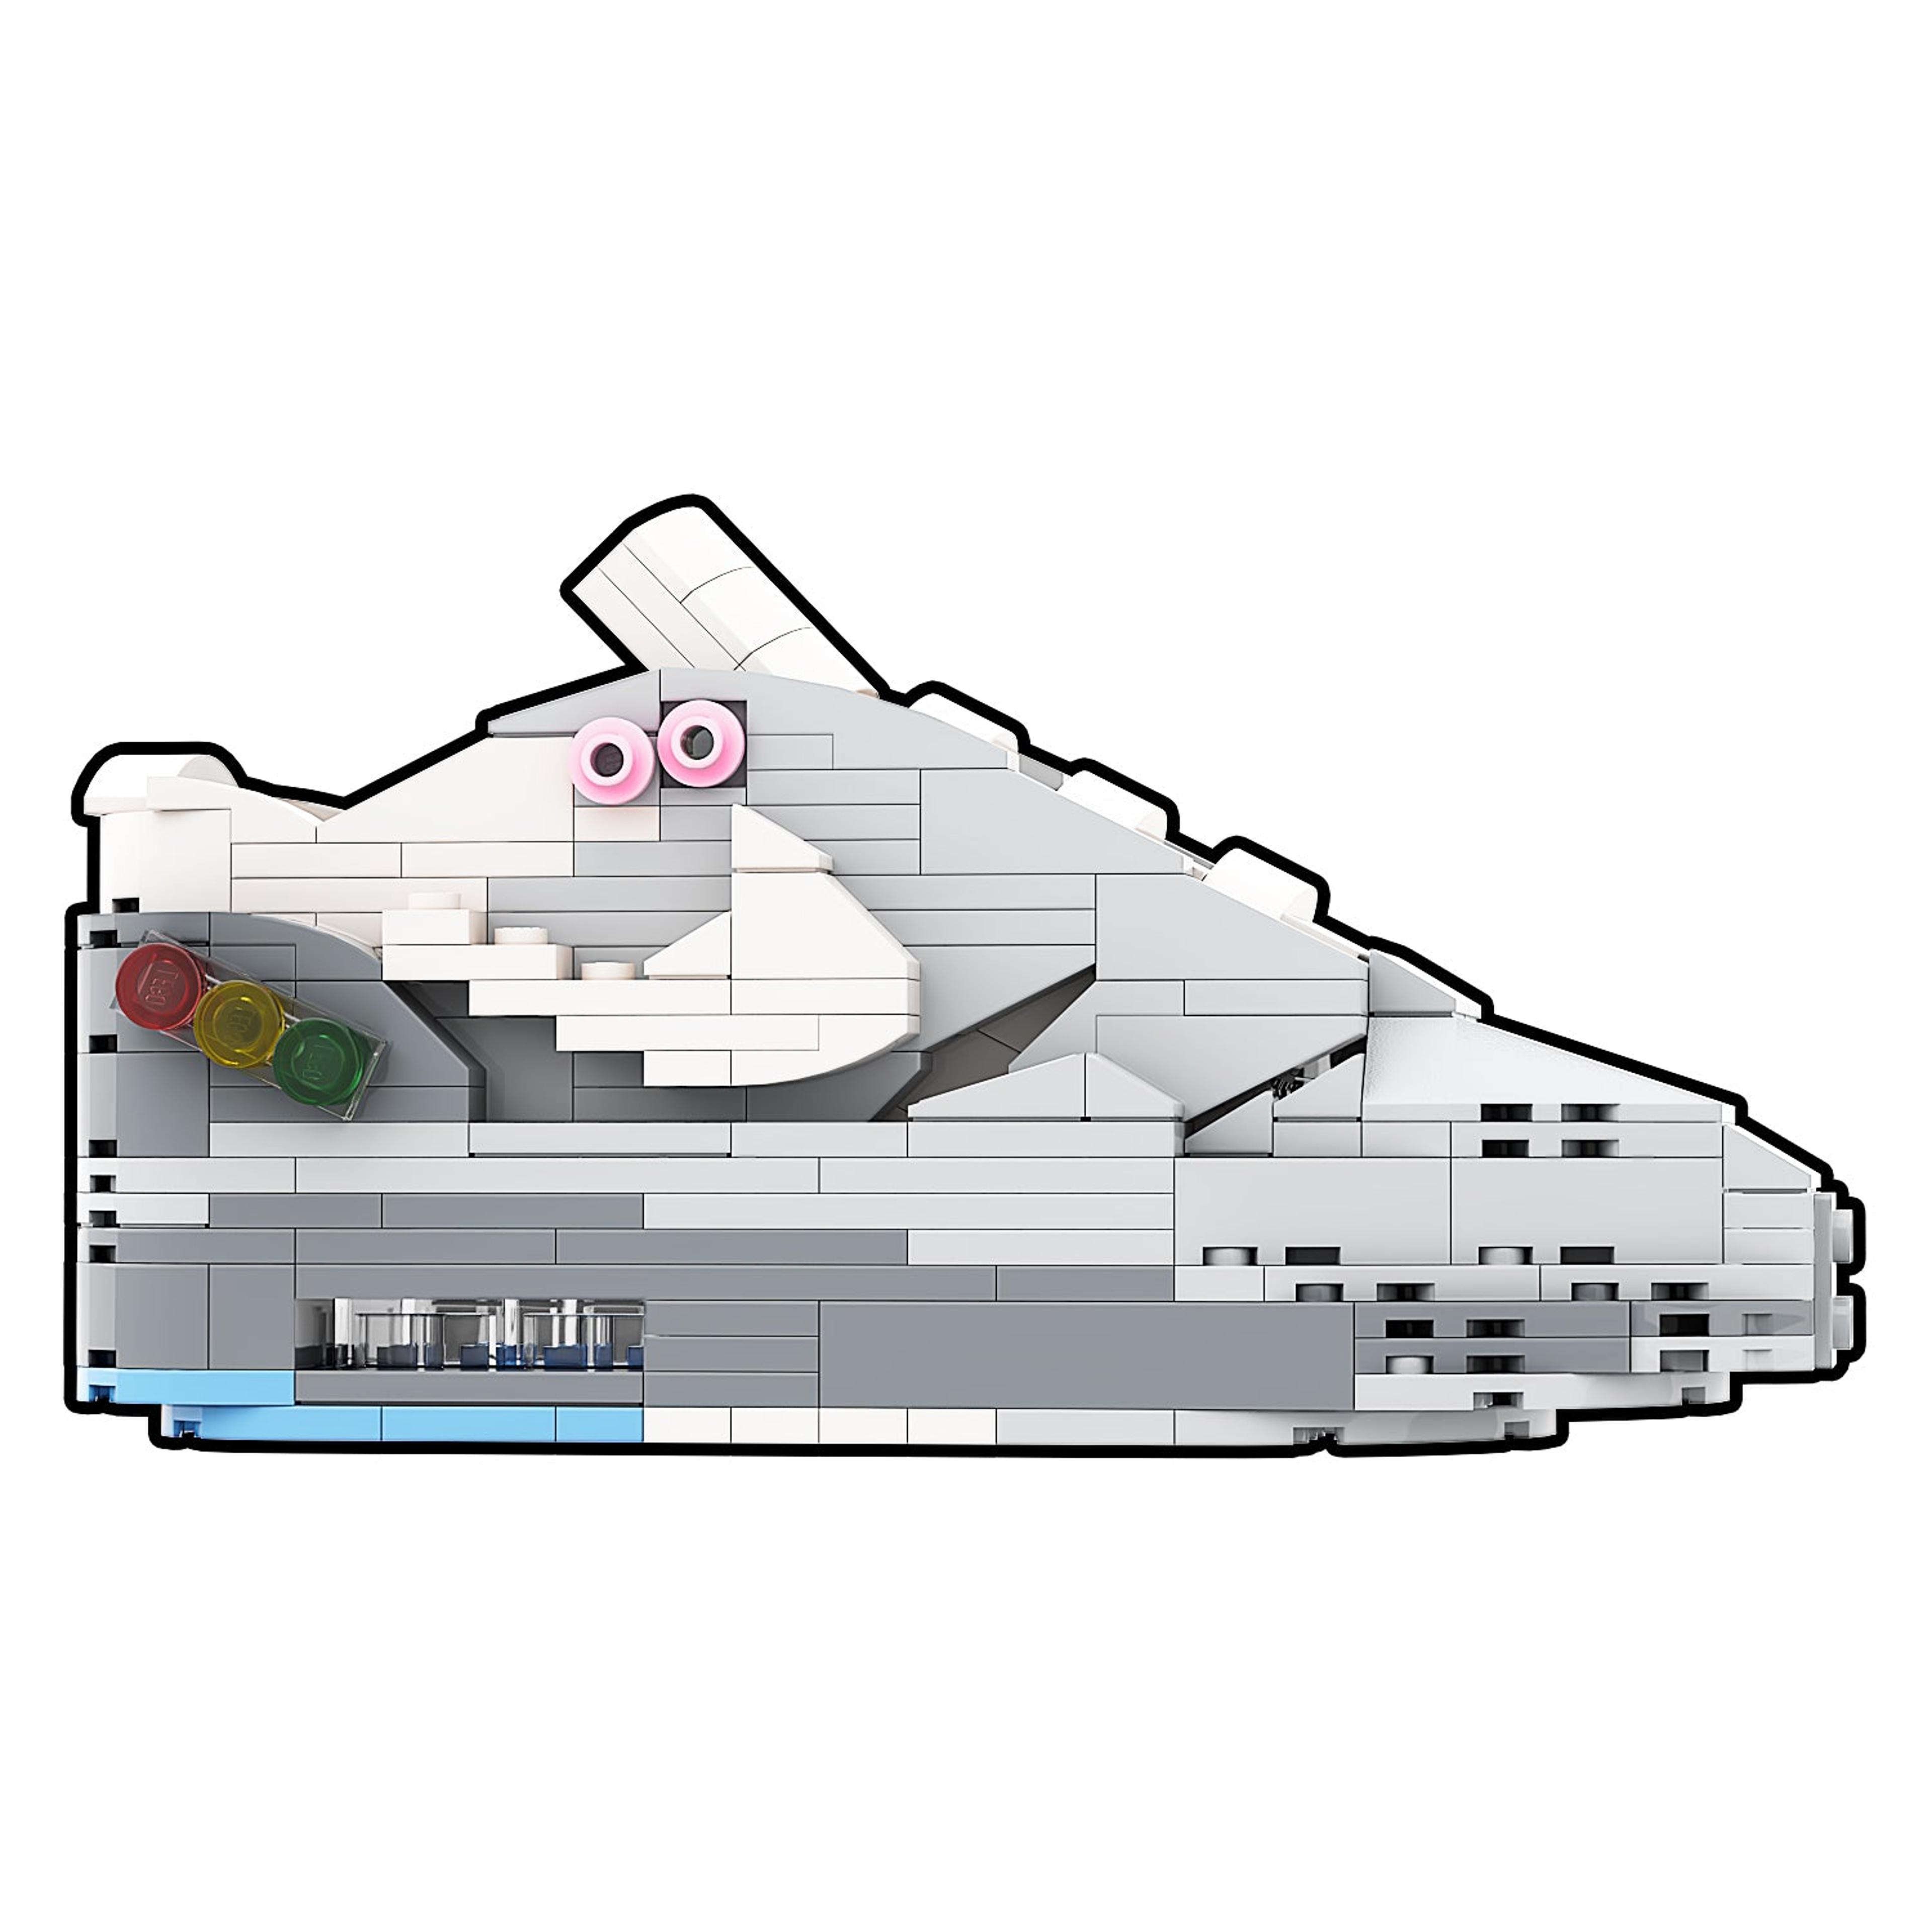 Alternate View 14 of REGULAR Air Max 1 "Mags MOC" Sneaker Bricks with Mini Figure